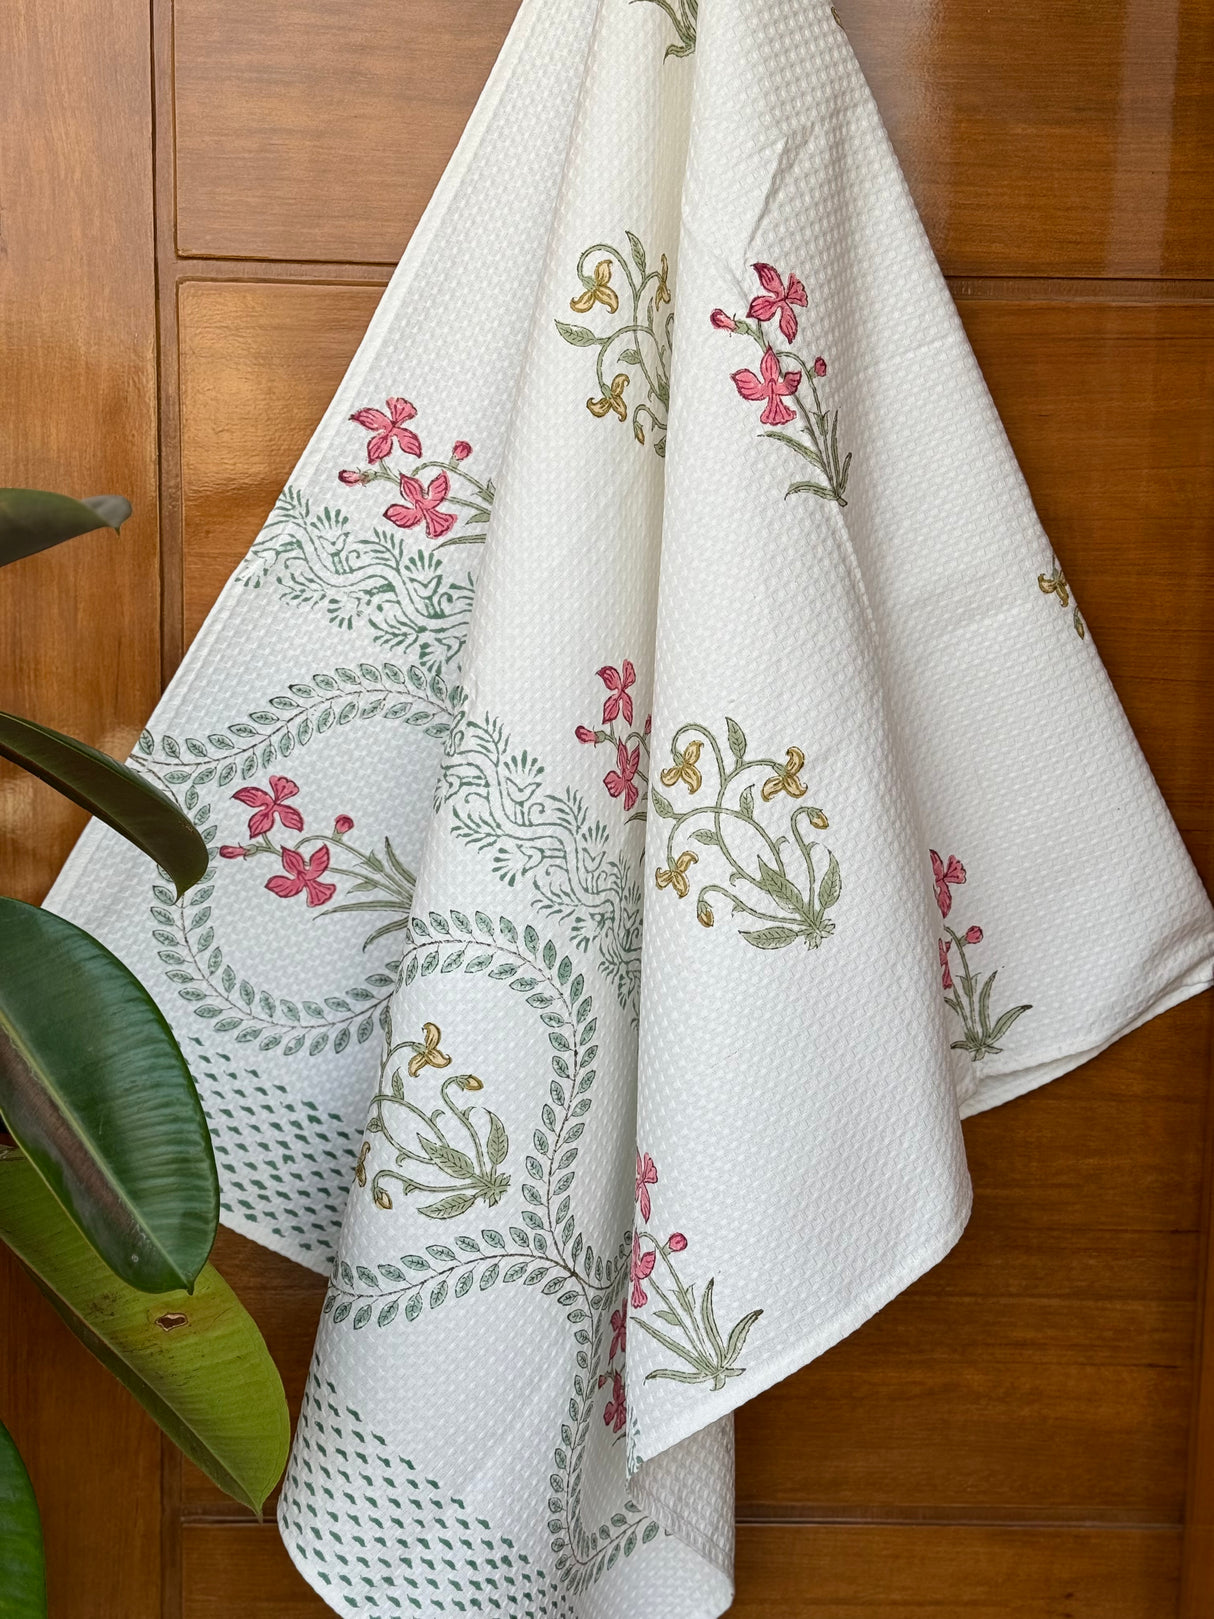 Blockprint Soft Cotton Towel (60-30 inches)